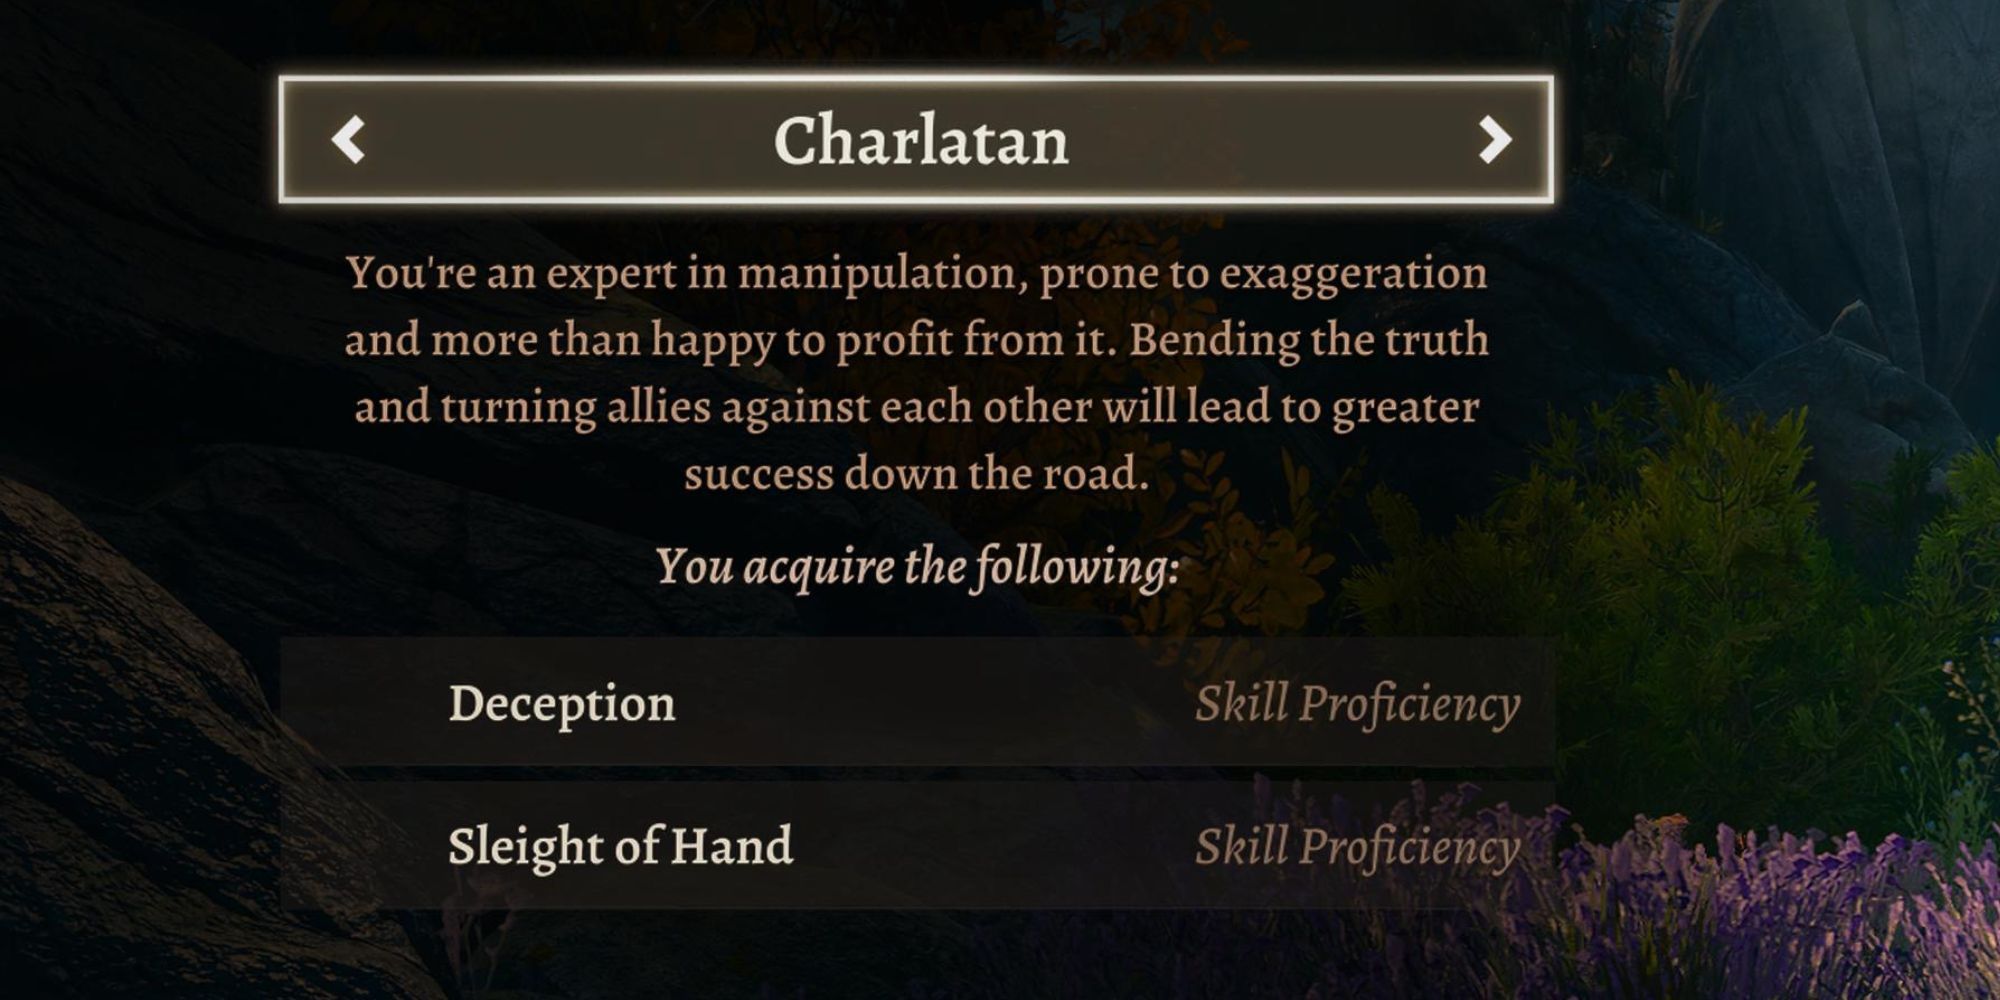 The Charlatan background in Baldur's Gate 3